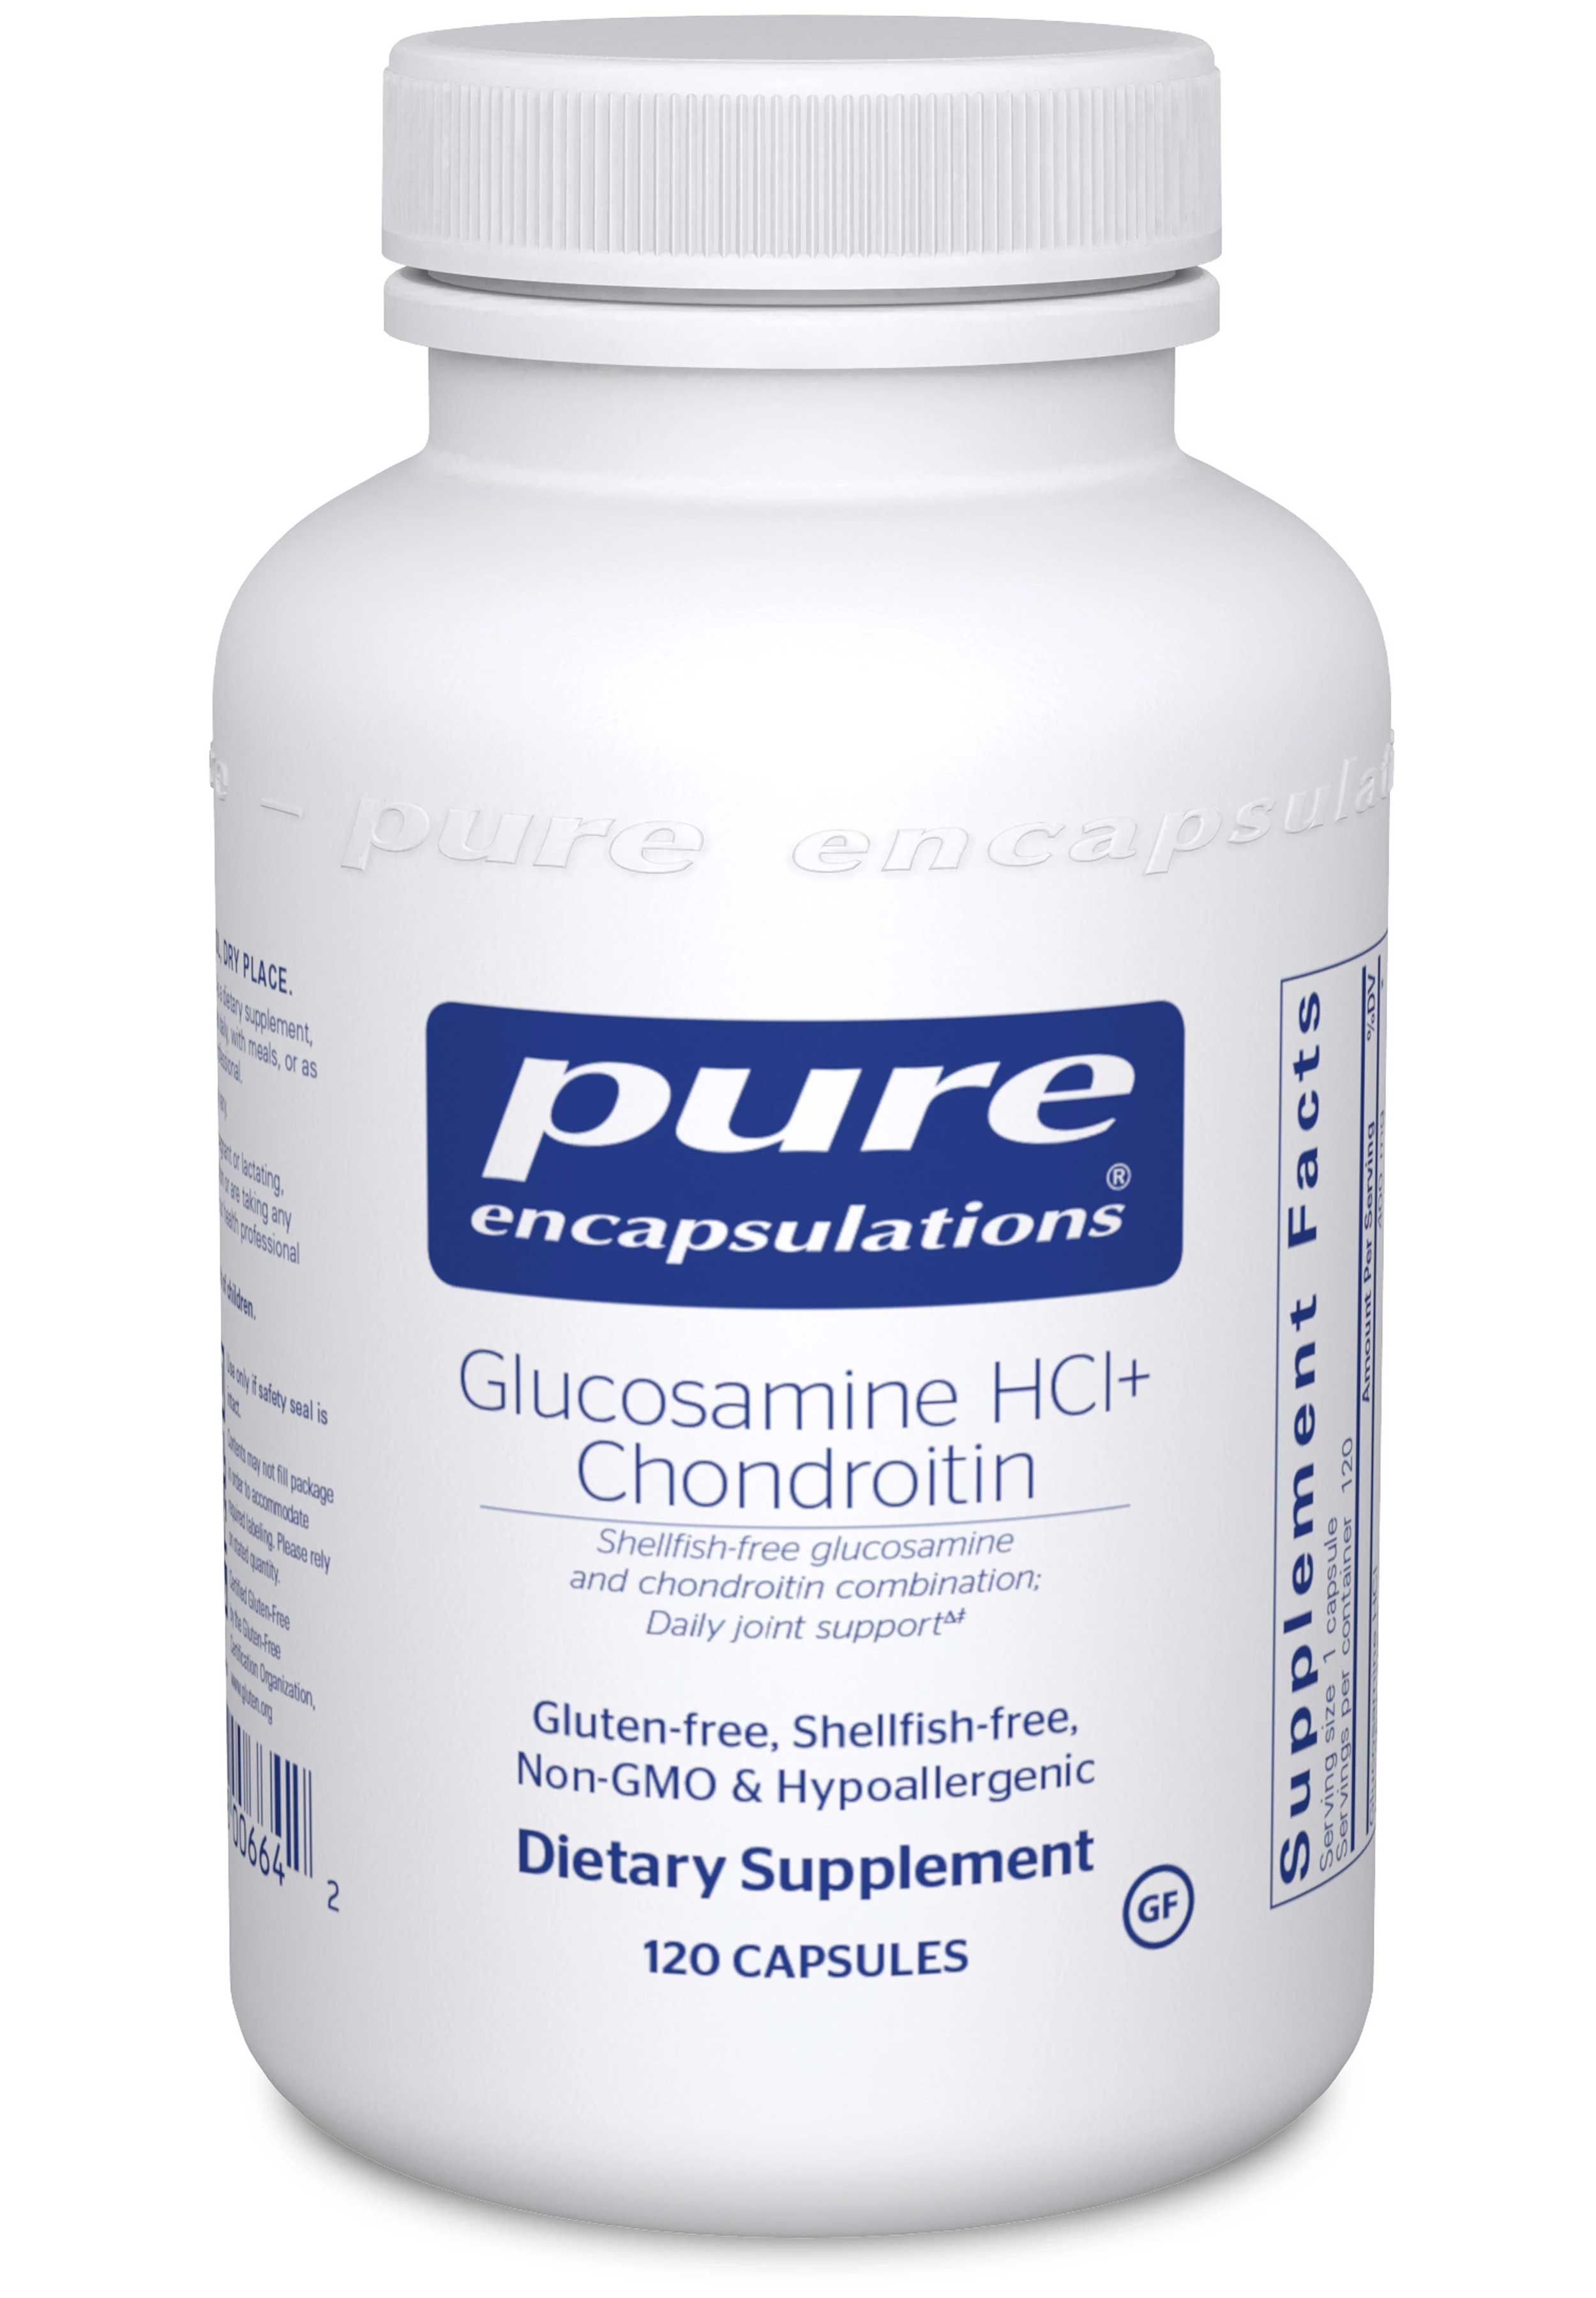 Pure Encapsulations Glucosamine HCI+ Chondroitin